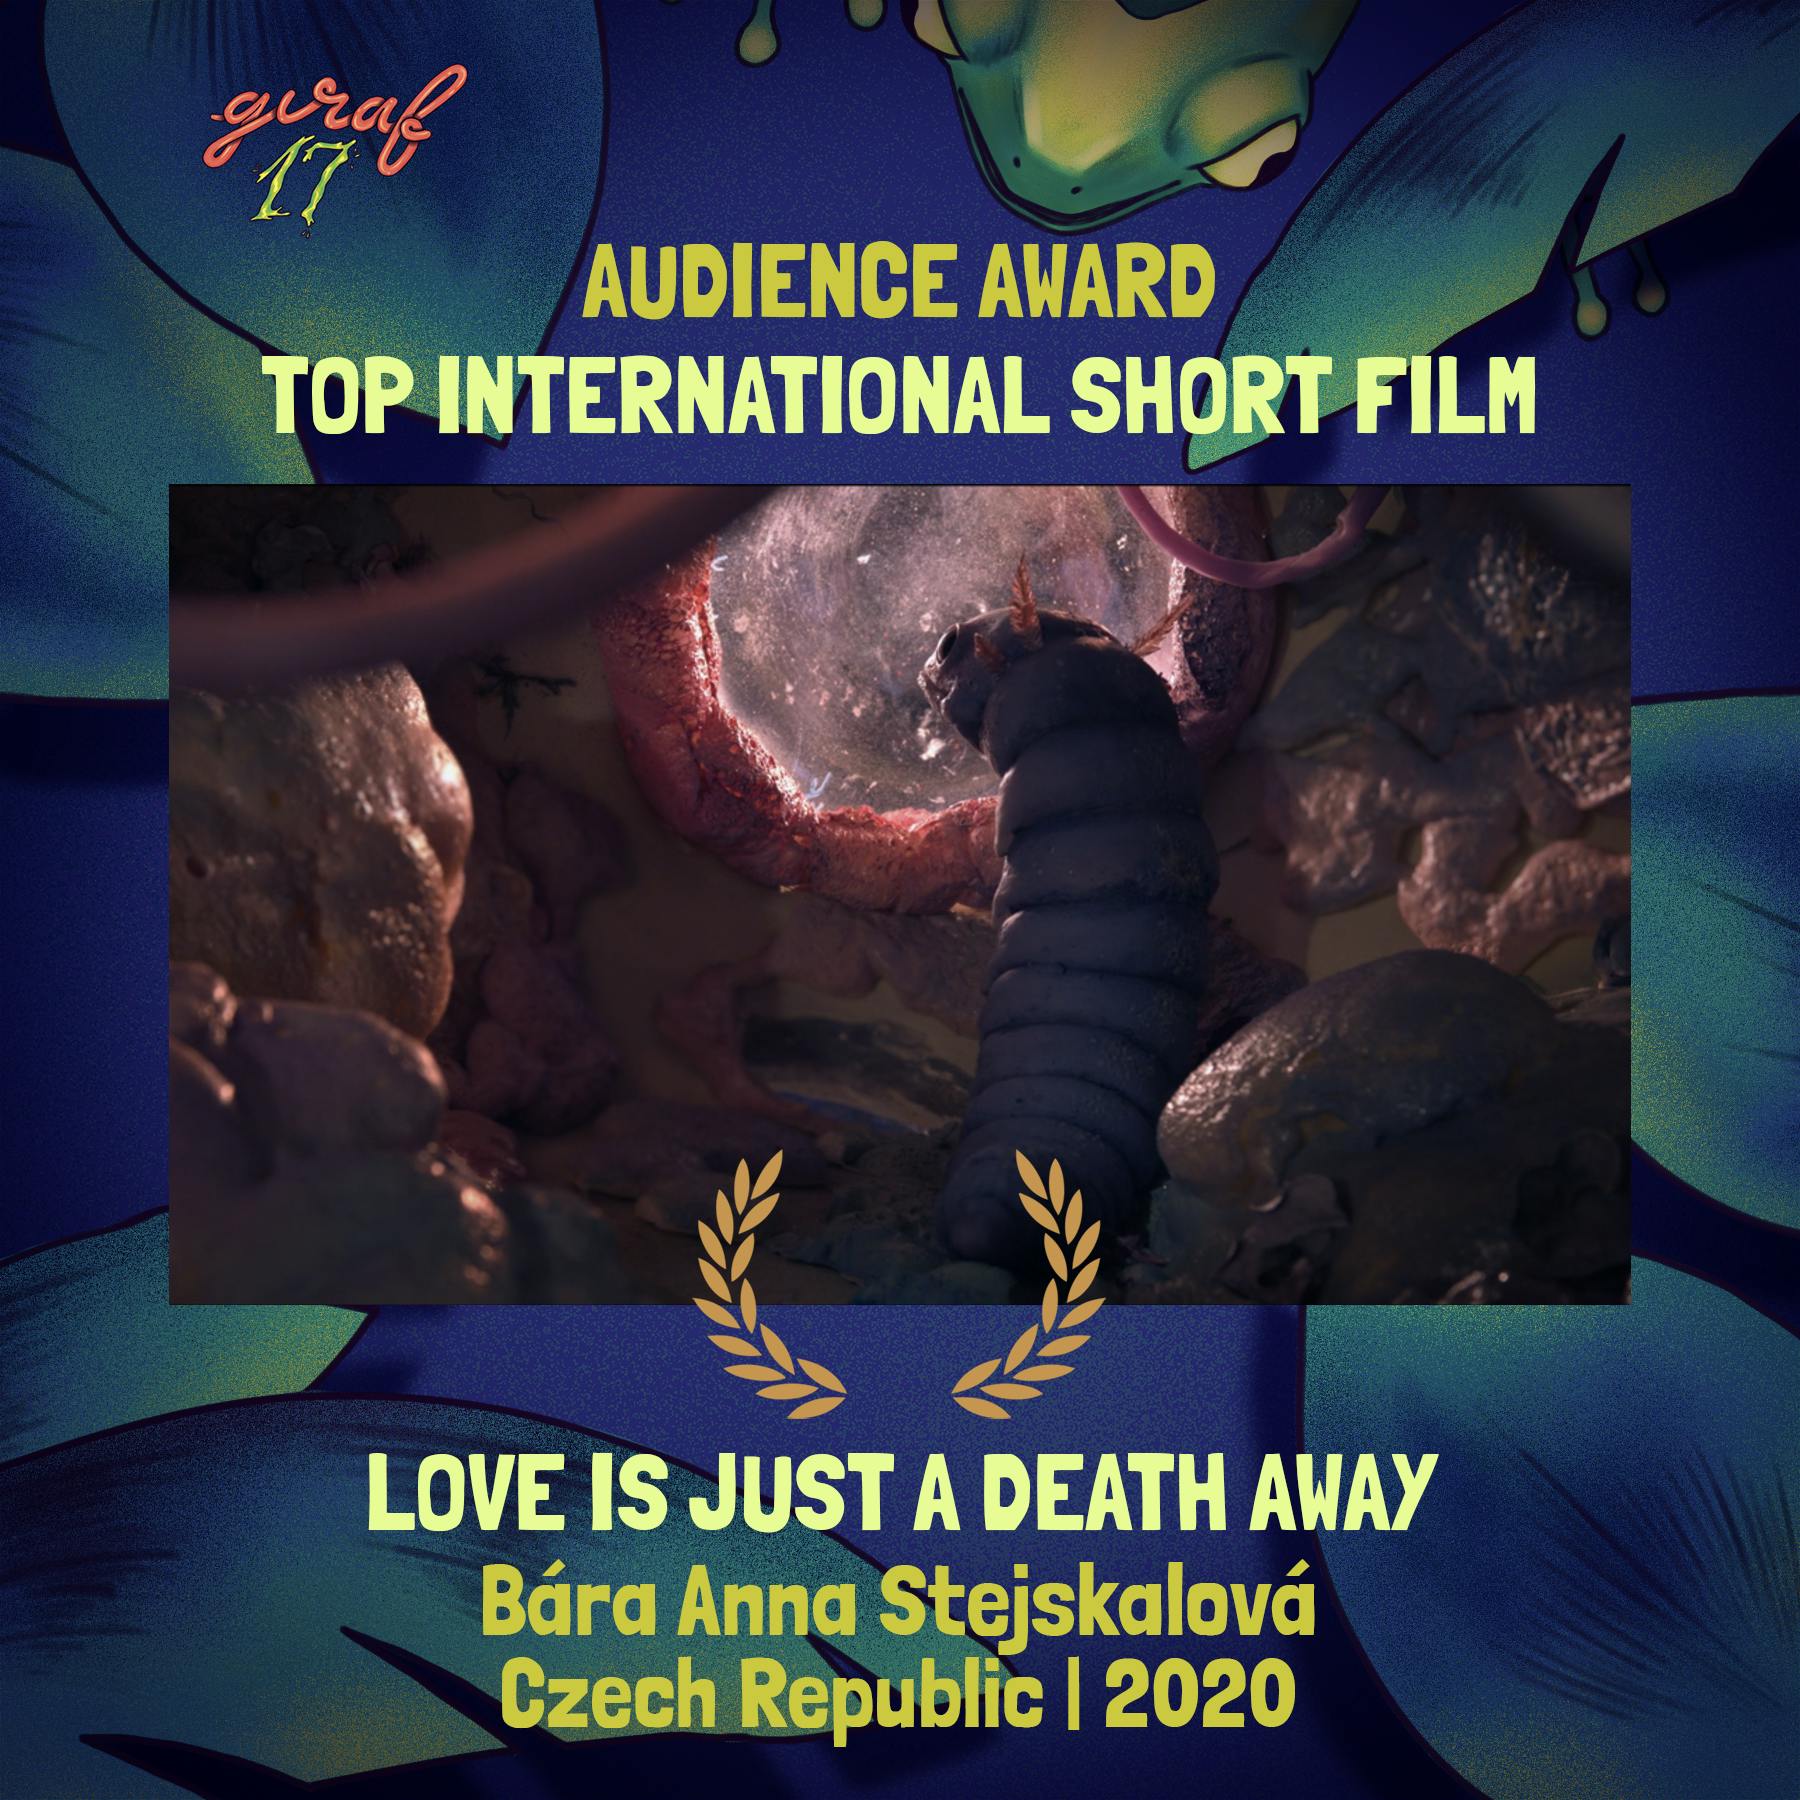 A worm stares wistfully out of a window. Surrounding text: GIRAF 17 Audience Award: Top International Short Film; Love is Just a Death Away, Bára Anna Stejskalová, Czech Republic, 2020